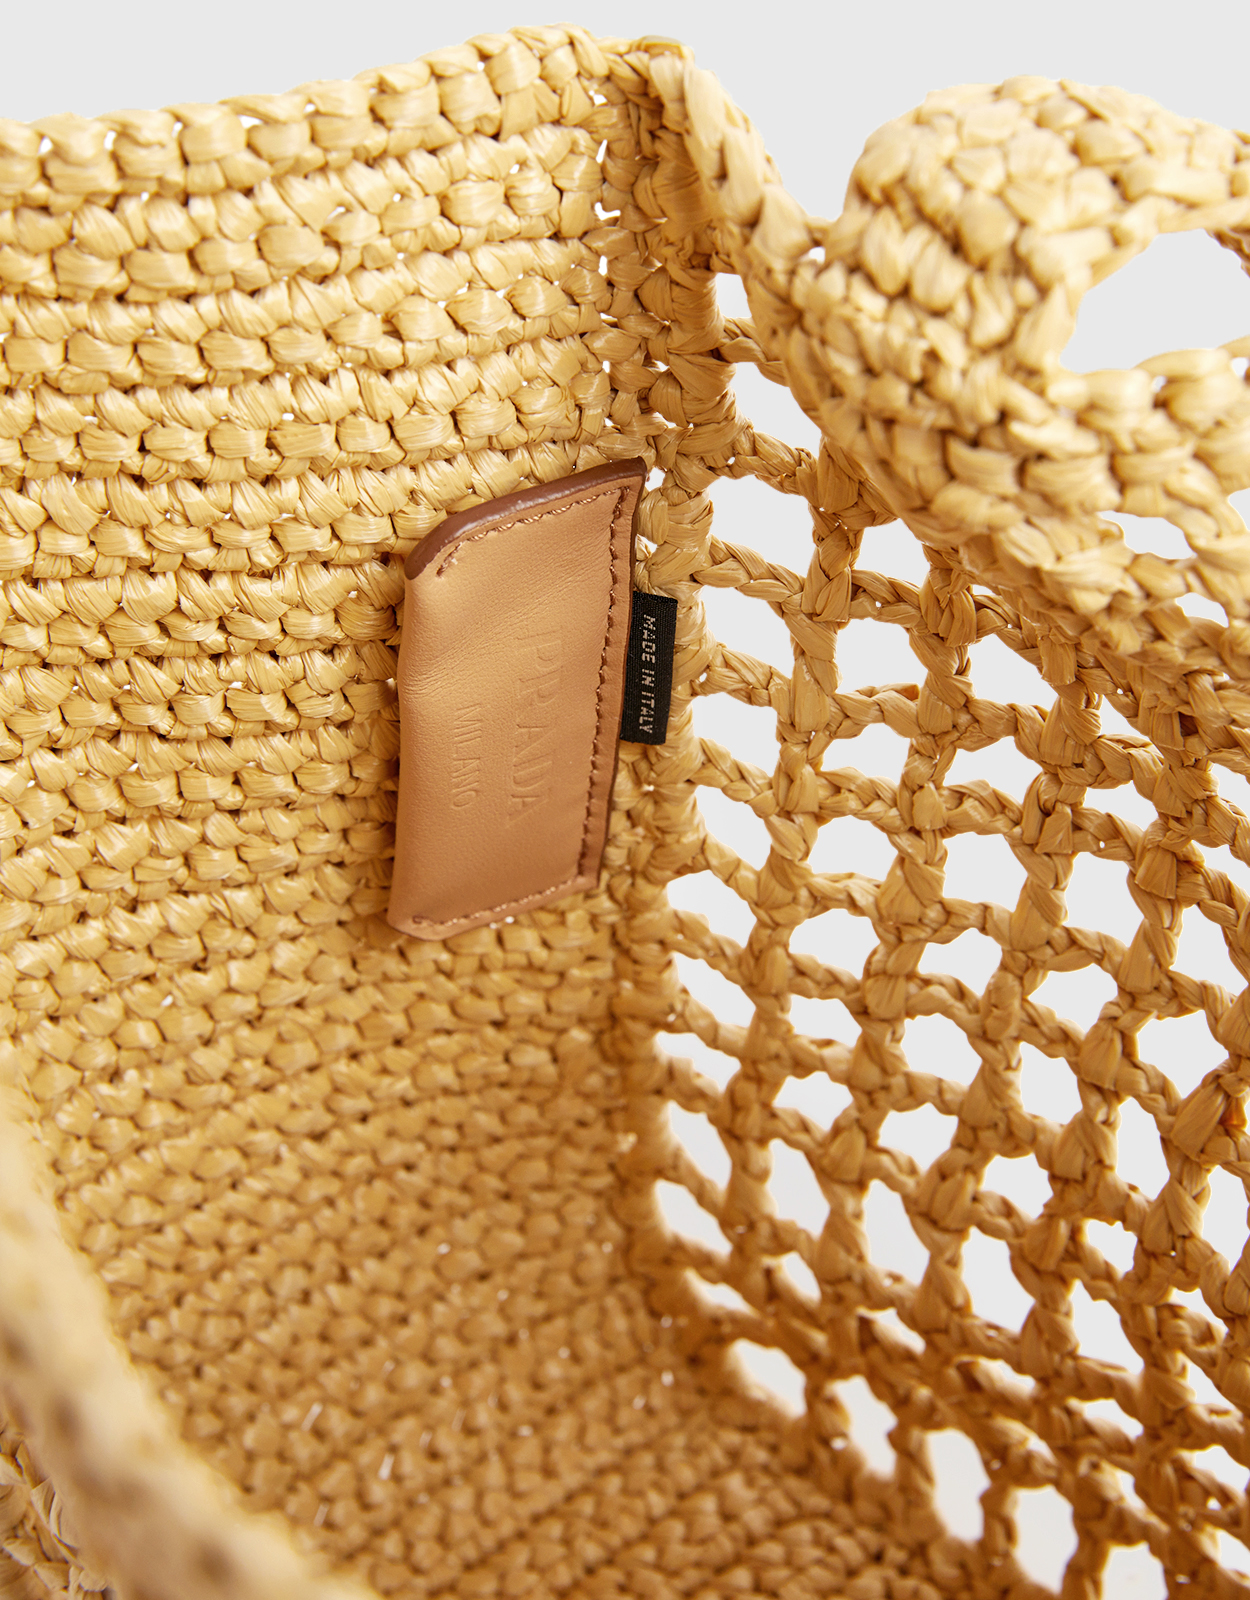 Prada Crochet And Leather Tote Bag - Tan/white